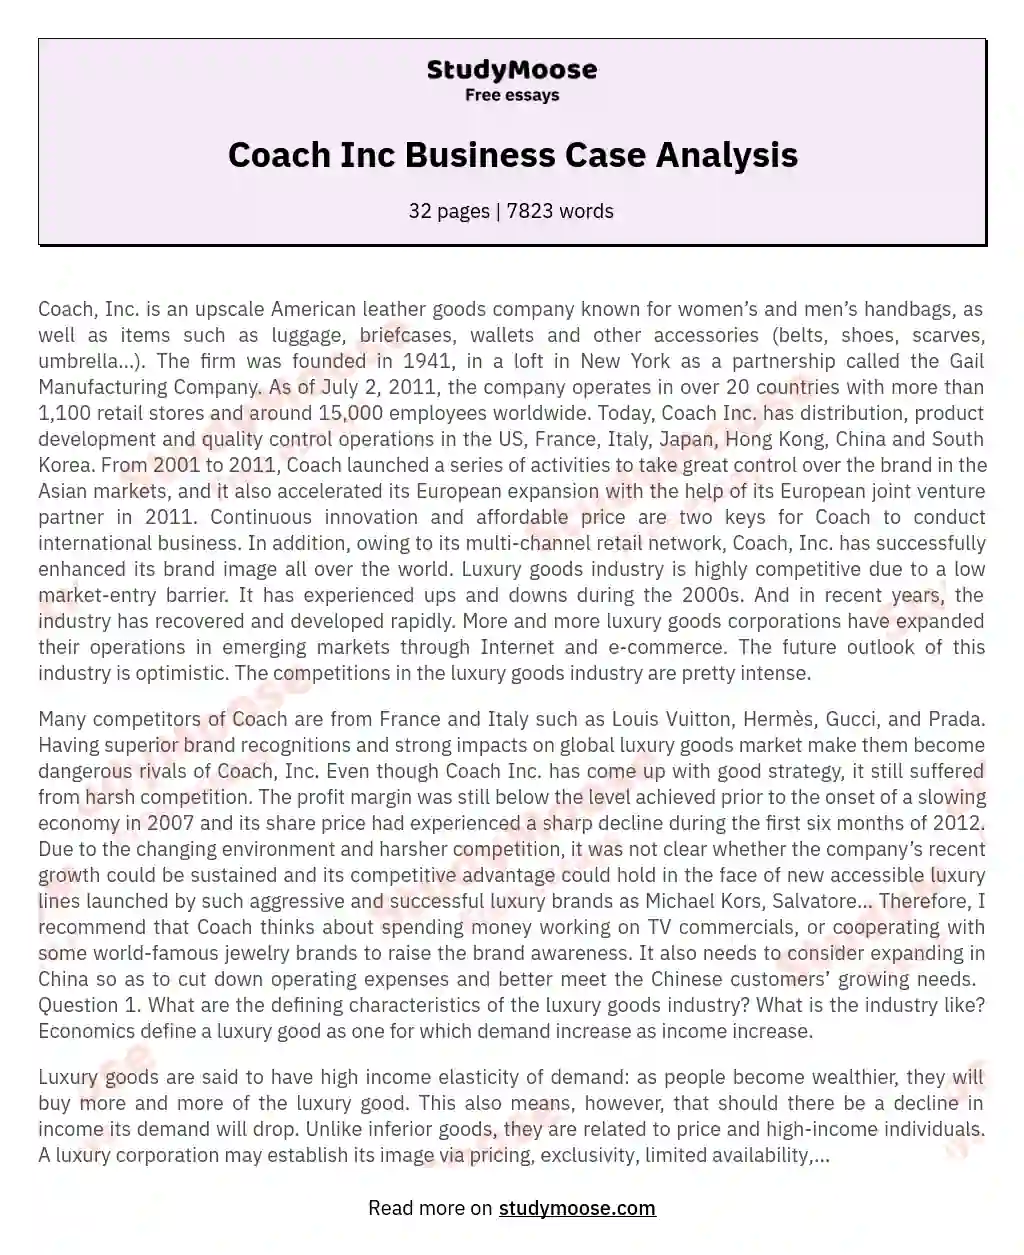 Coach Inc Business Case Analysis